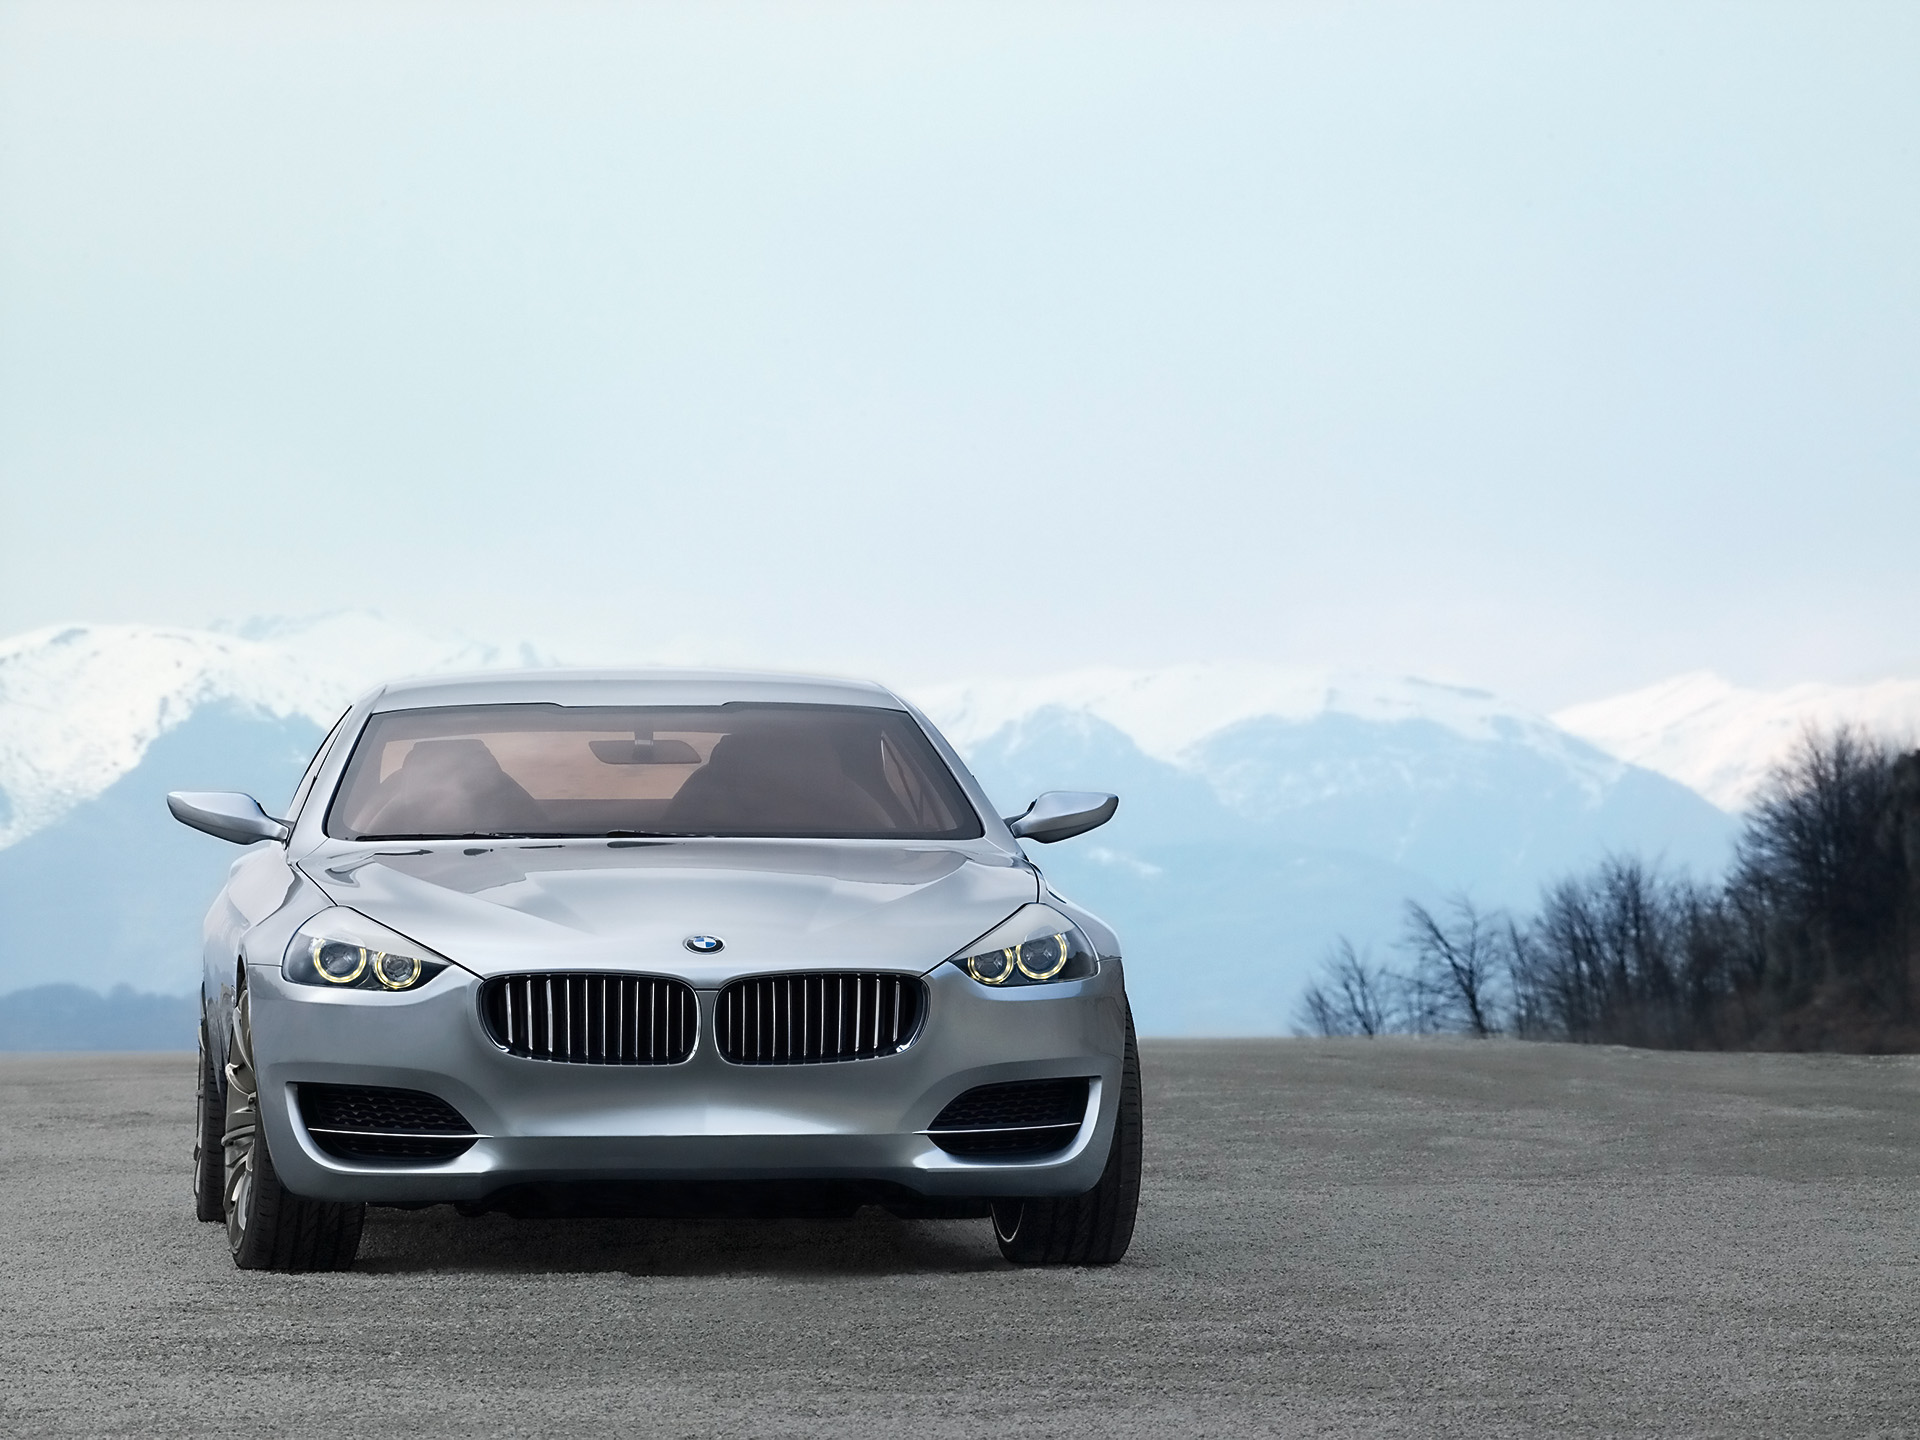 BMW Concept CS 02